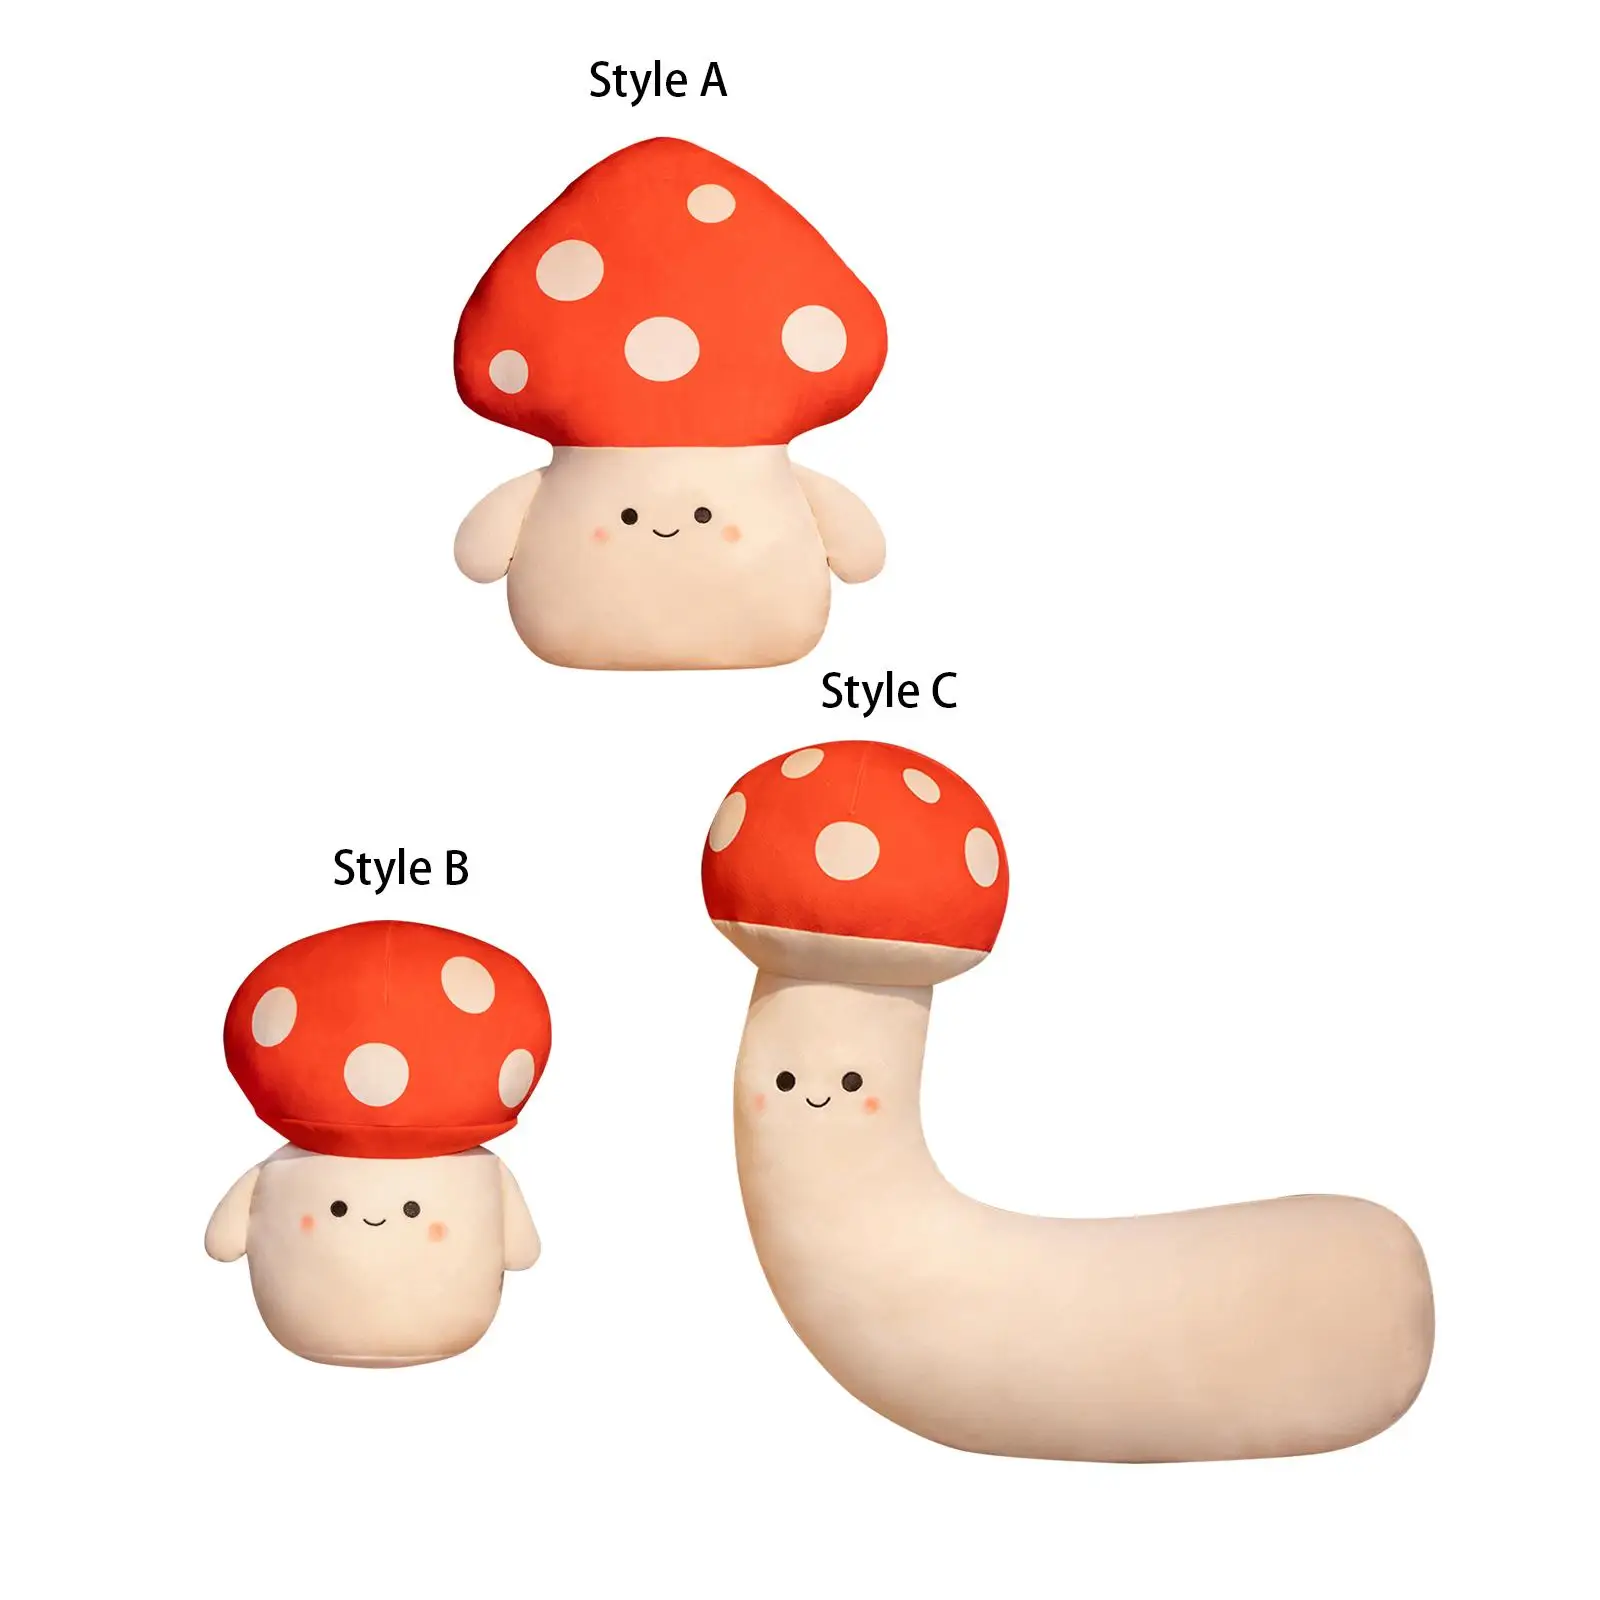 Cute Plush Mushroom Toy Stuffed Mushroom Plush Toy for Decor Birthday Gift